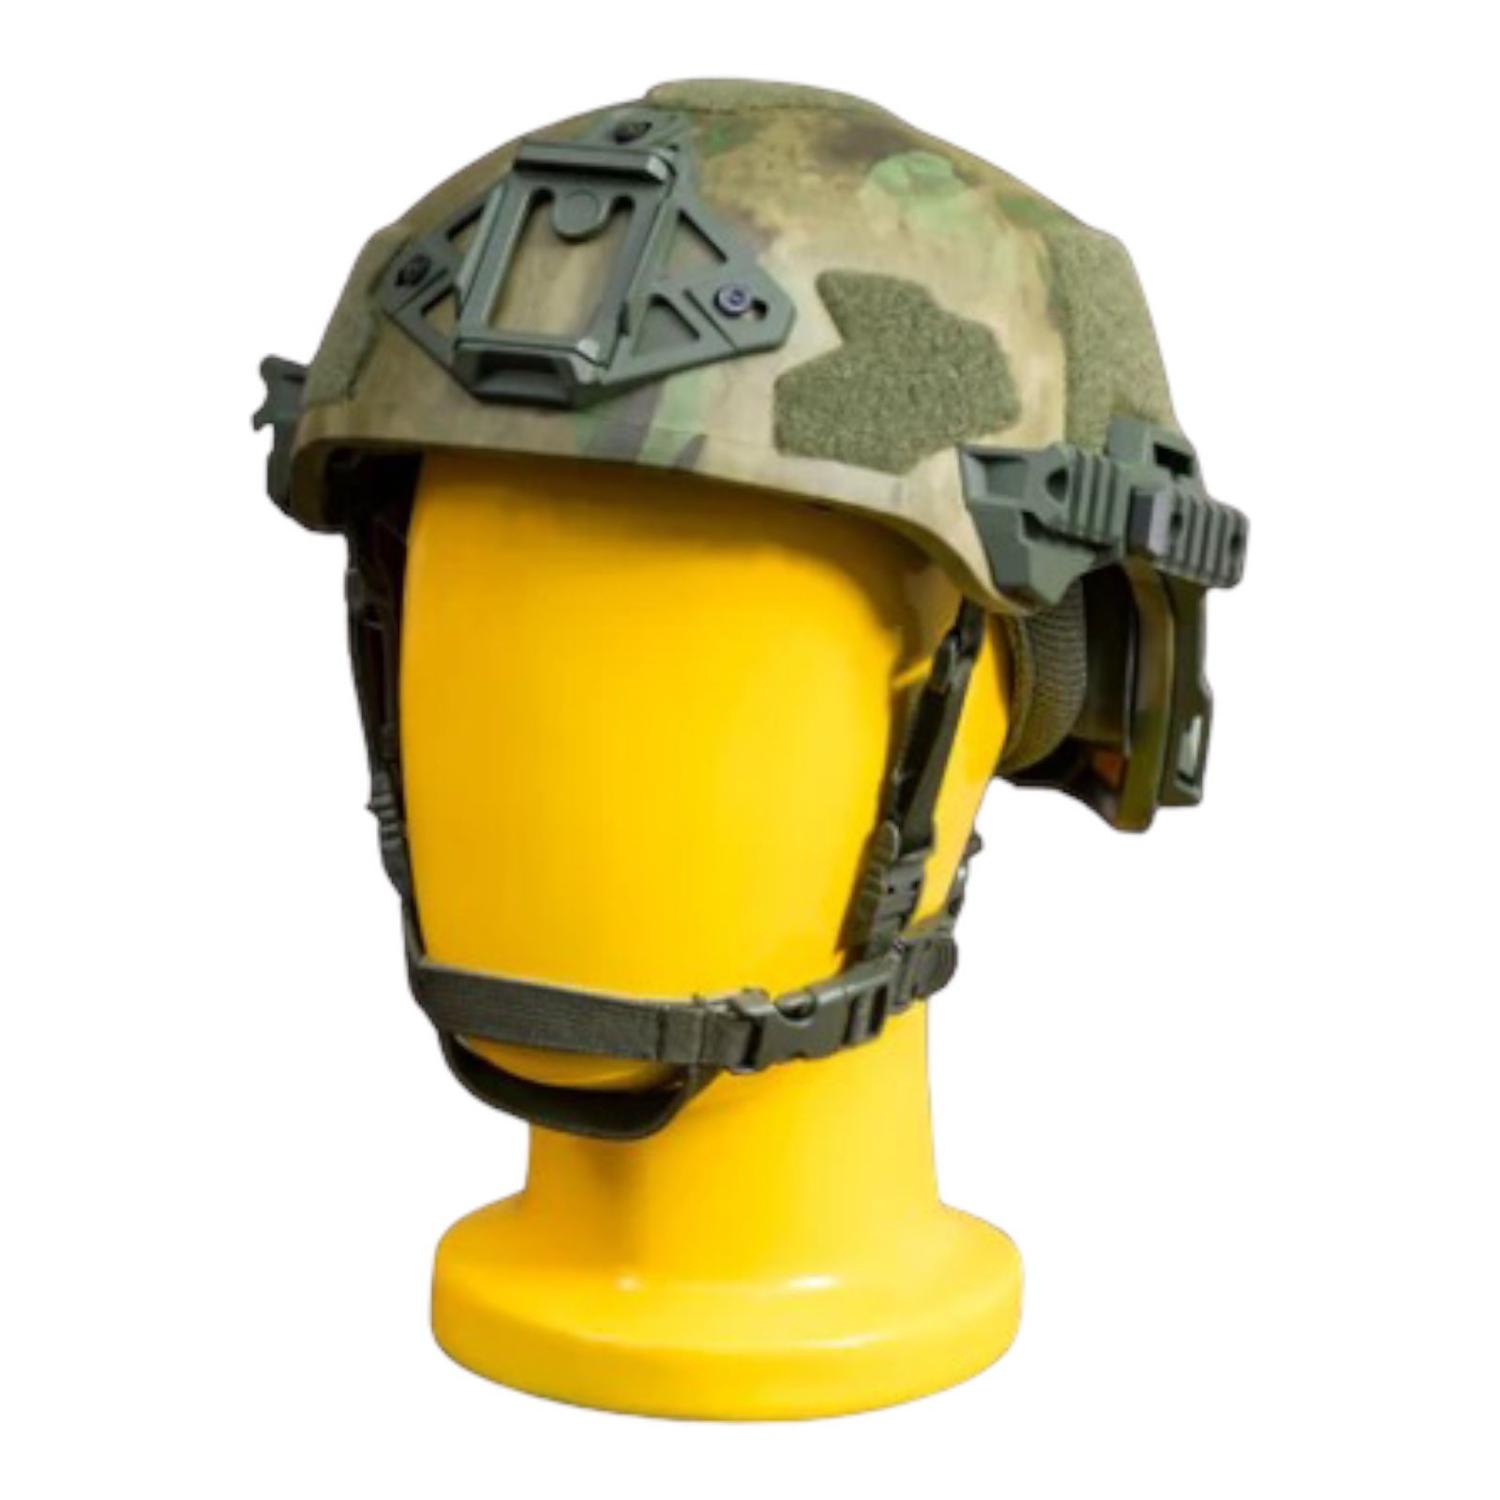 Тактический шлем Militech Exfil Atacs FG tactical helmet wendy rail adapter for team wendy exfil helmet 1 0 2 0 3 0 msasordin airsoft shooting hunting tactical headset